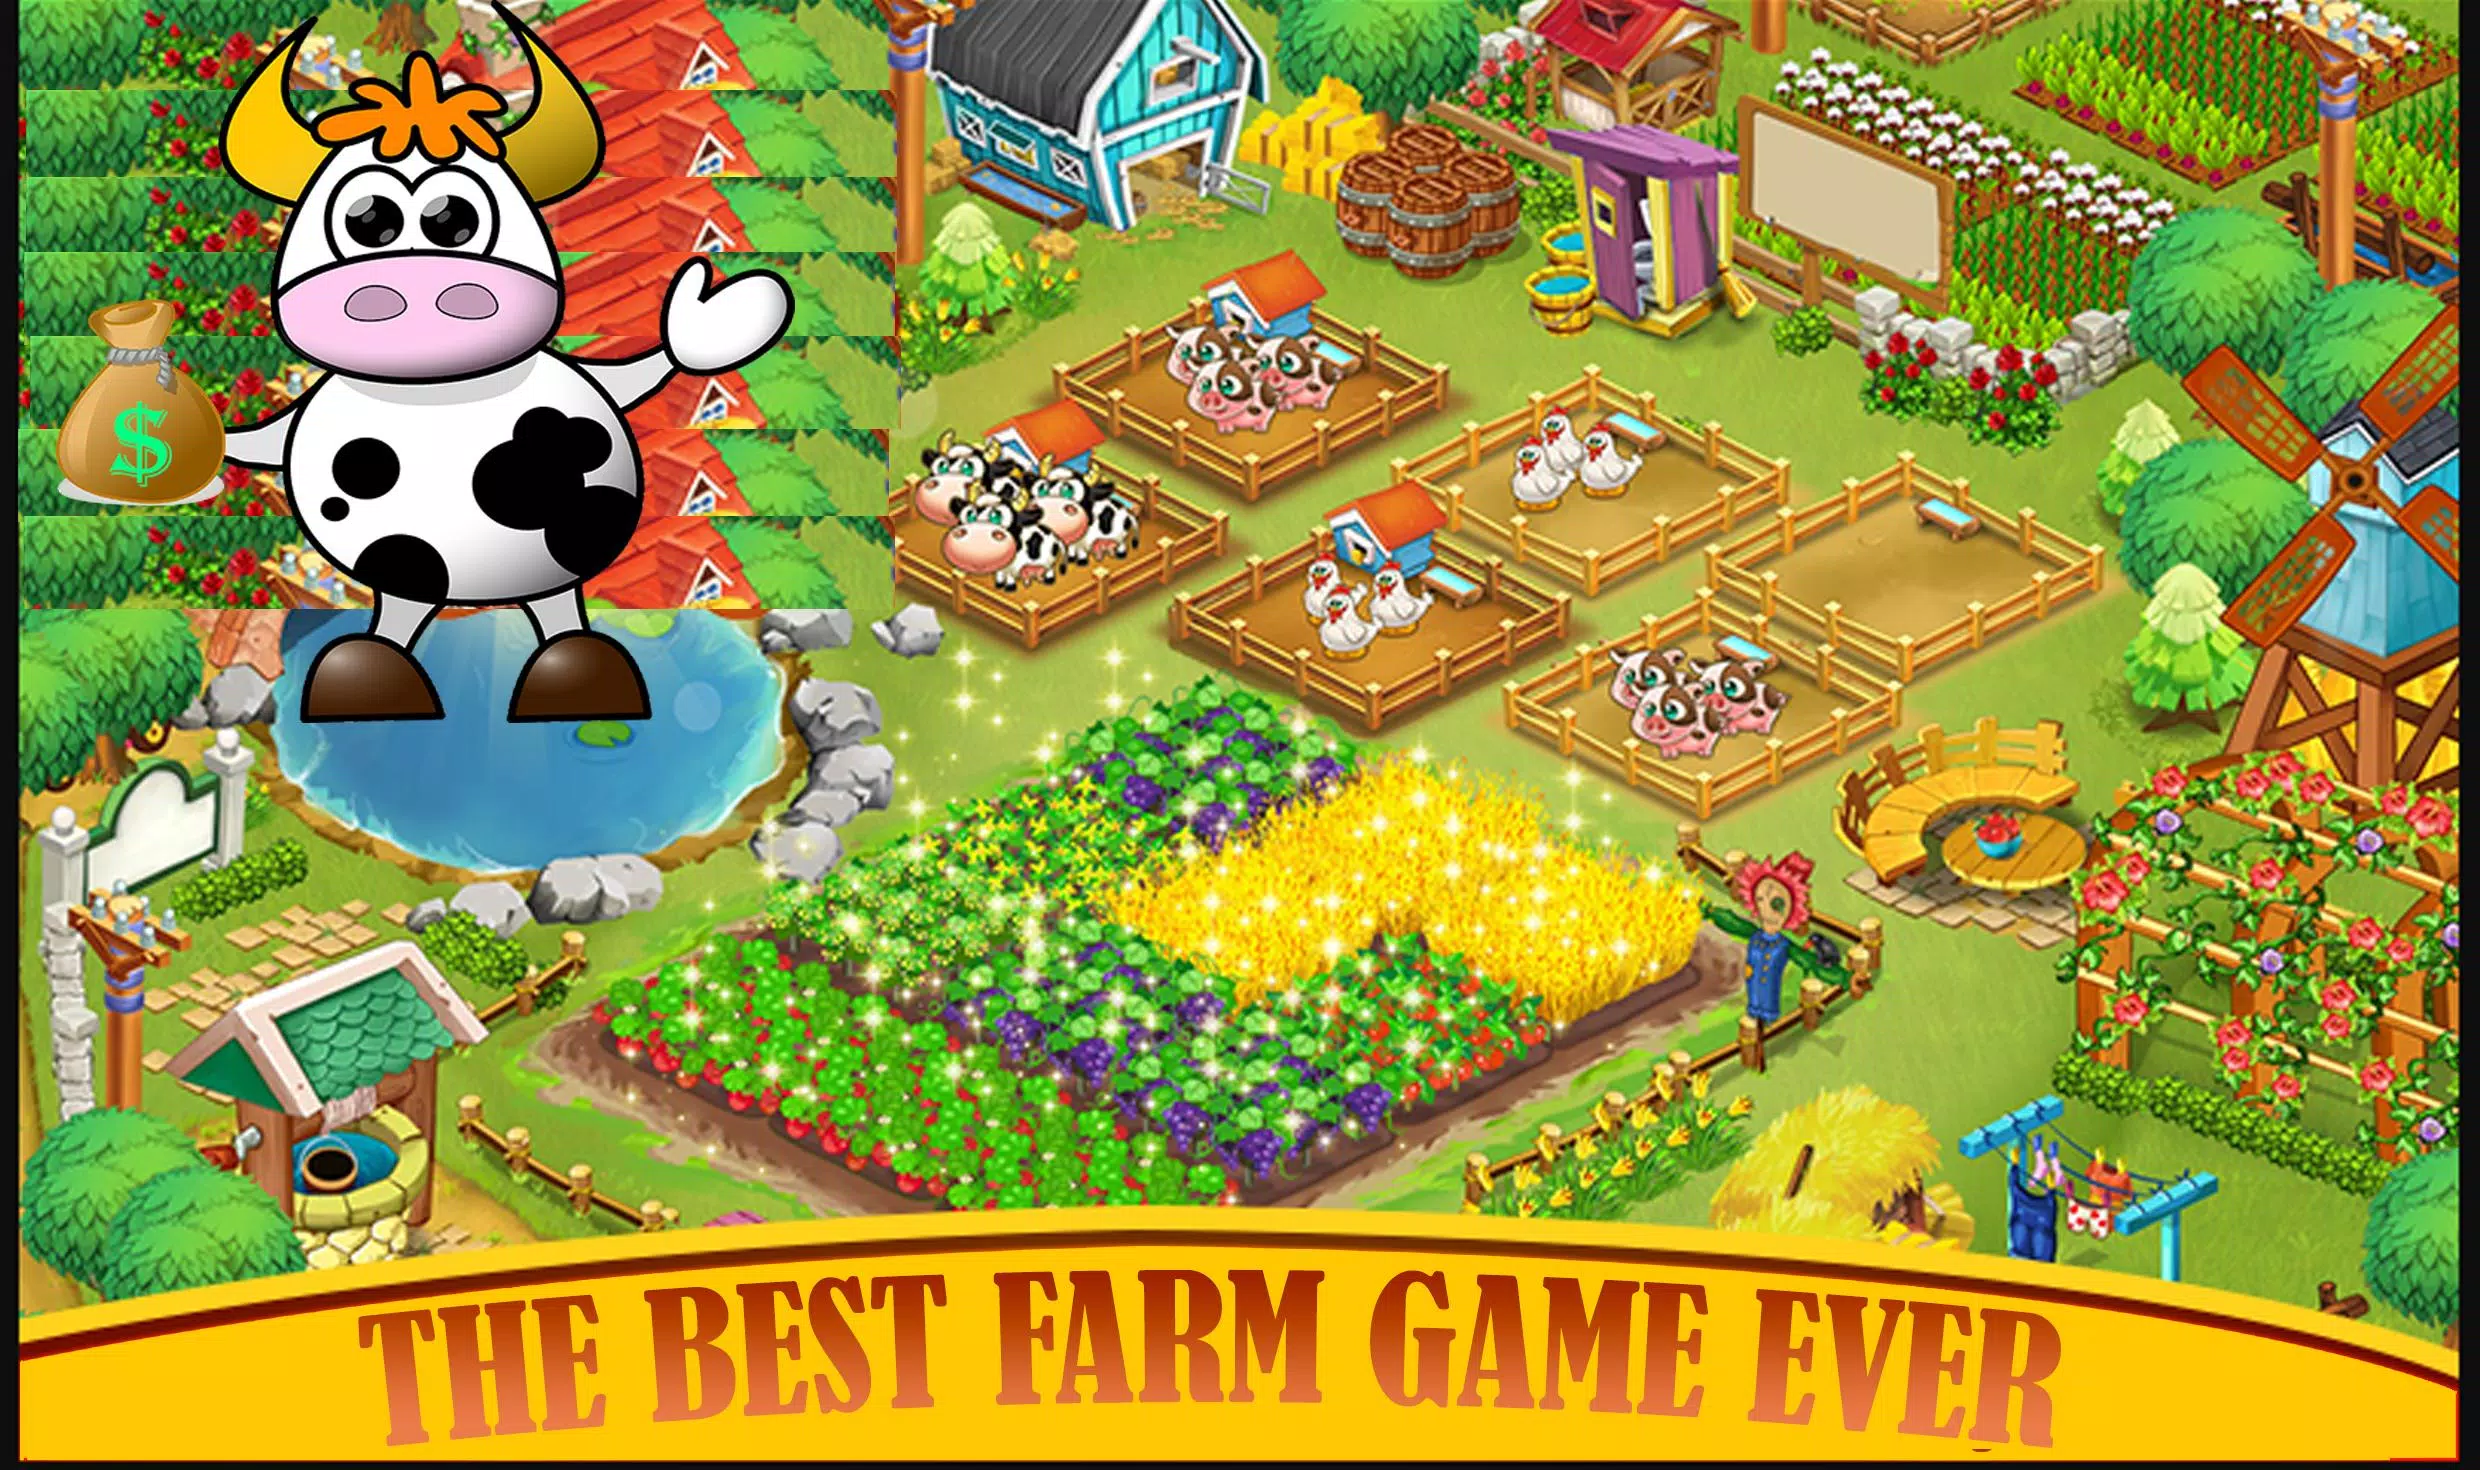 Farm village business - Farm game offline 2019 APK للاندرويد تنزيل